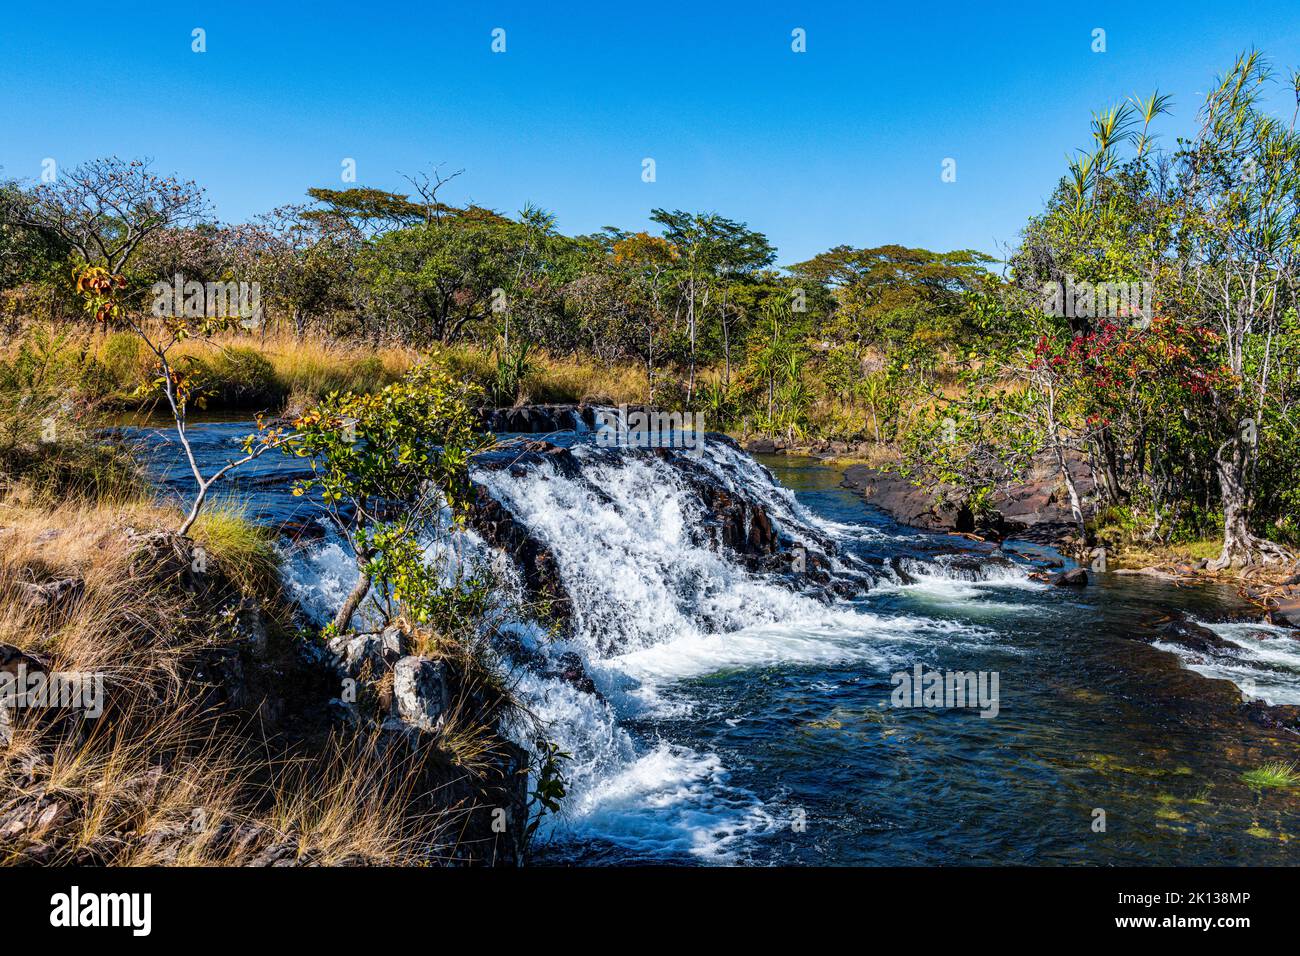 Ntumba Chushi Falls (Ntumbachushi Falls) am Ngona River, Nord-Sambia, Afrika Stockfoto